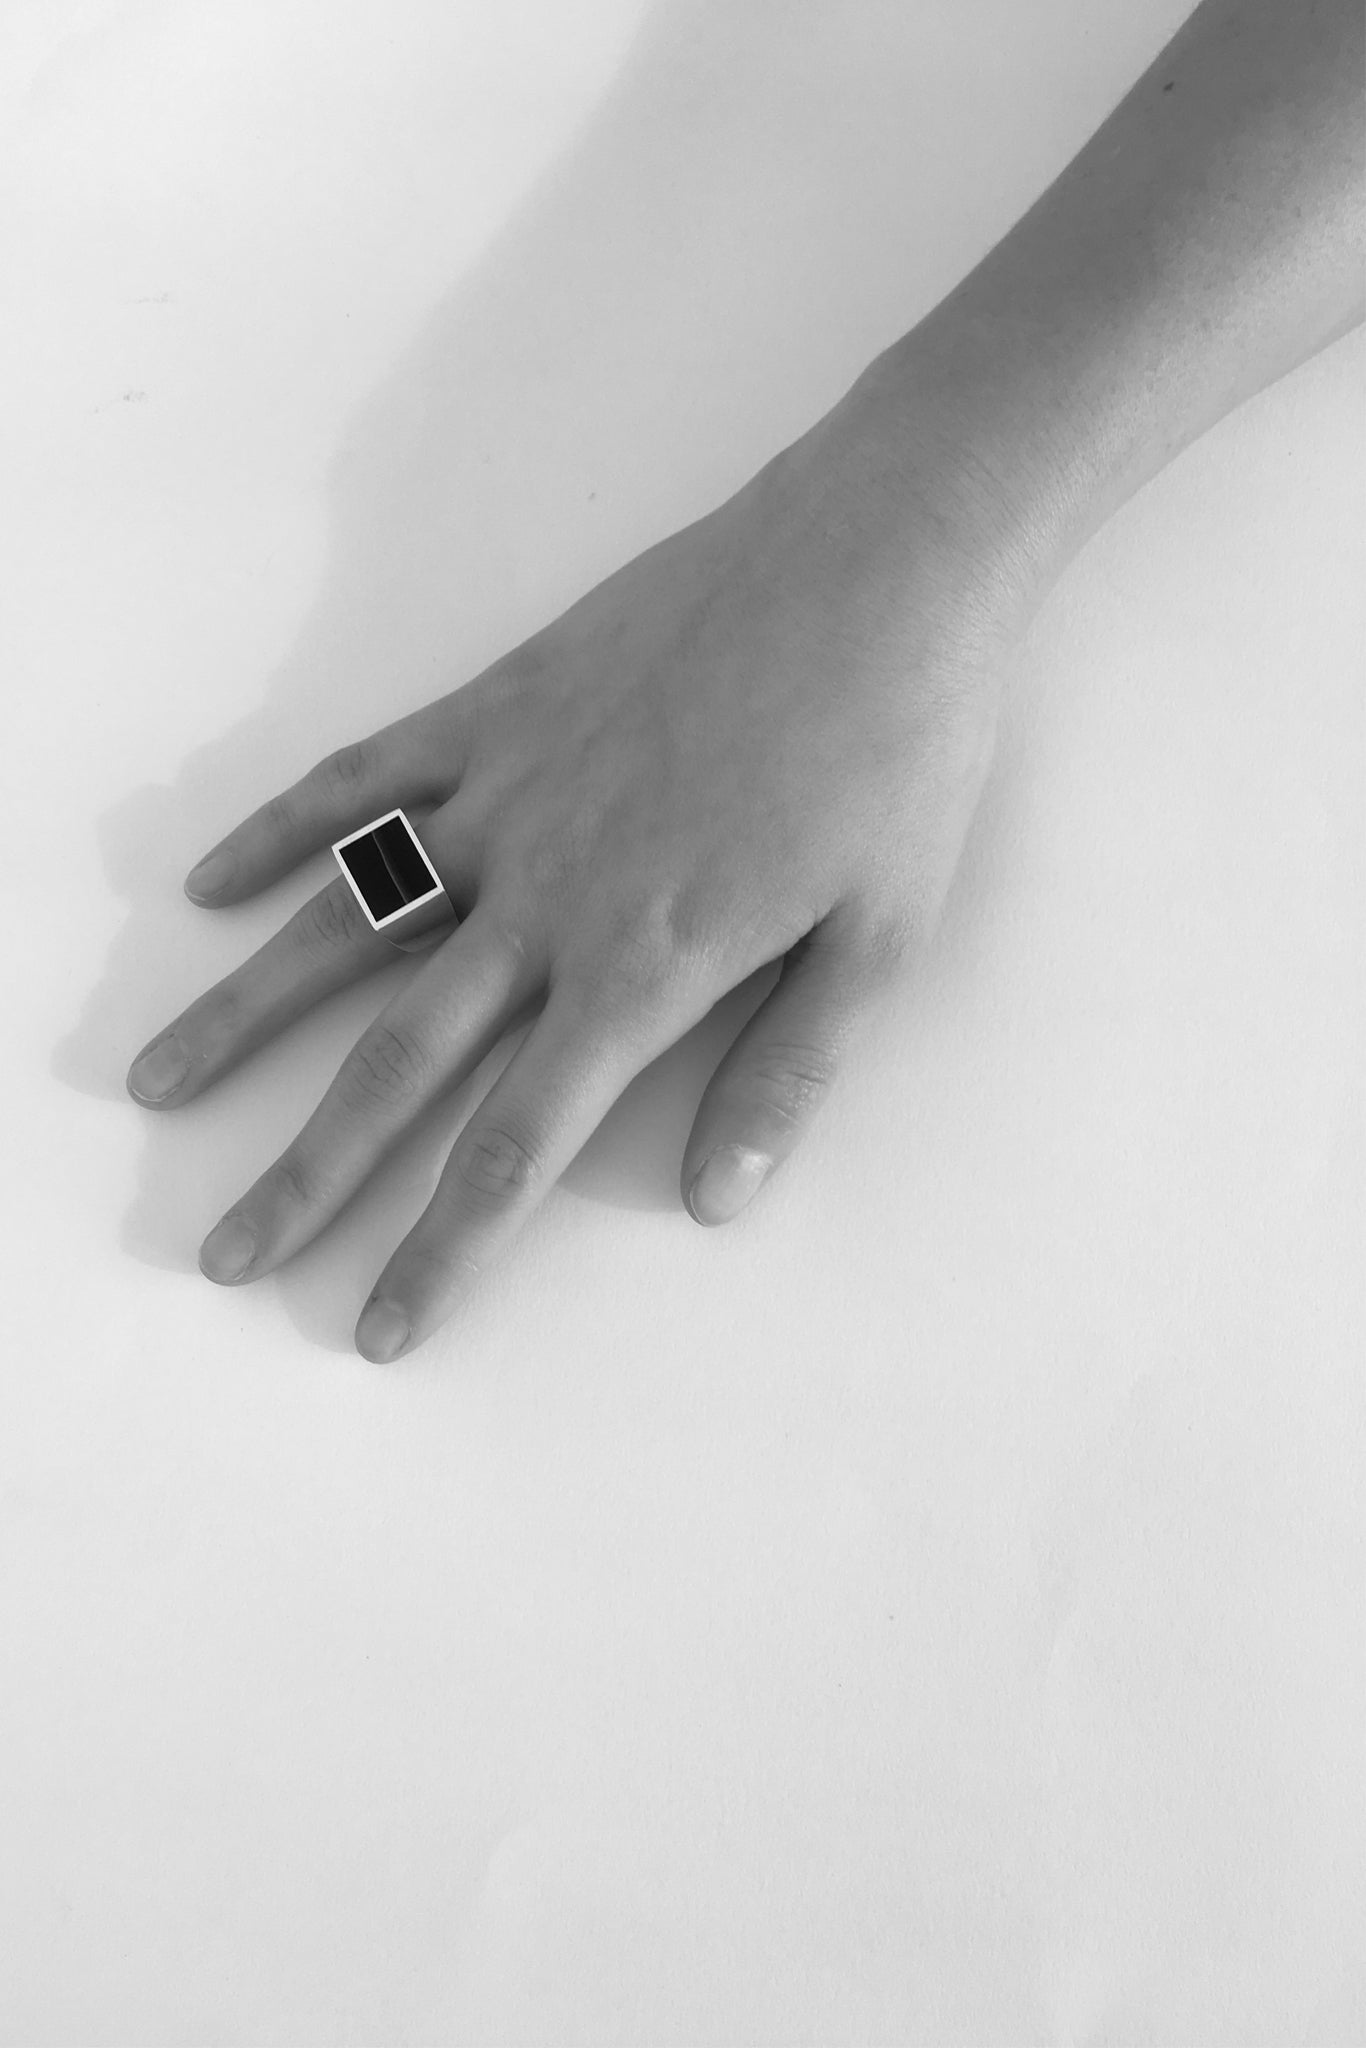 Black Onyx Square Signet Ring